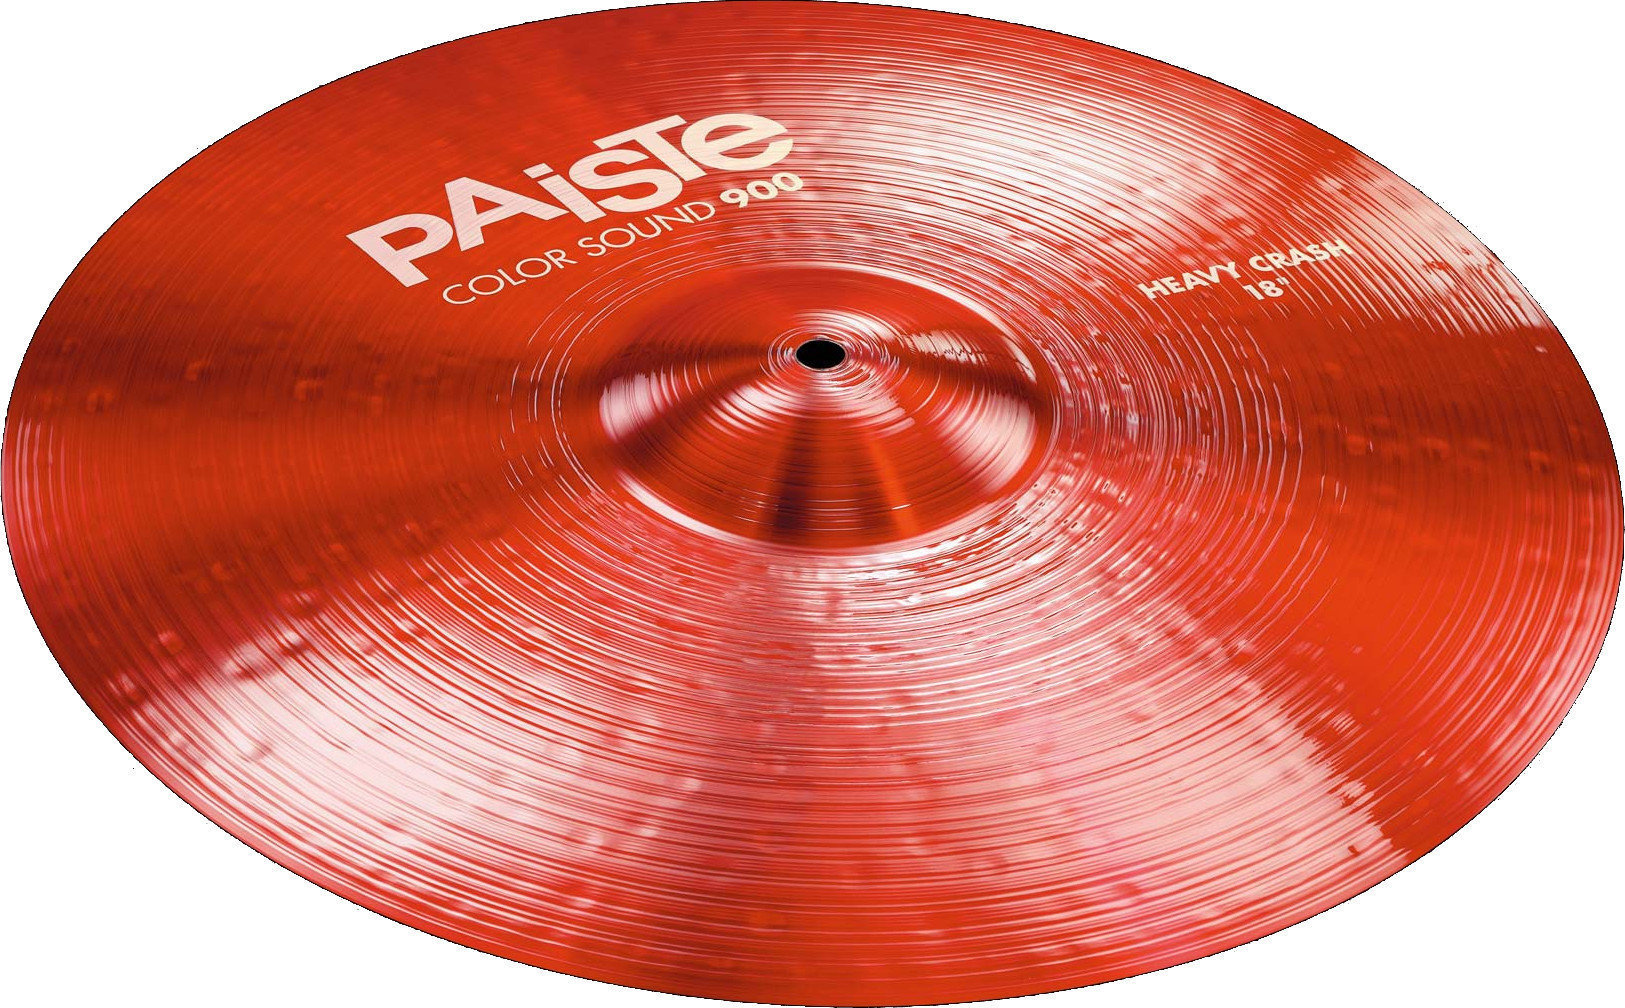 Cymbale crash Paiste Color Sound 900  Heavy Cymbale crash 18" Rouge